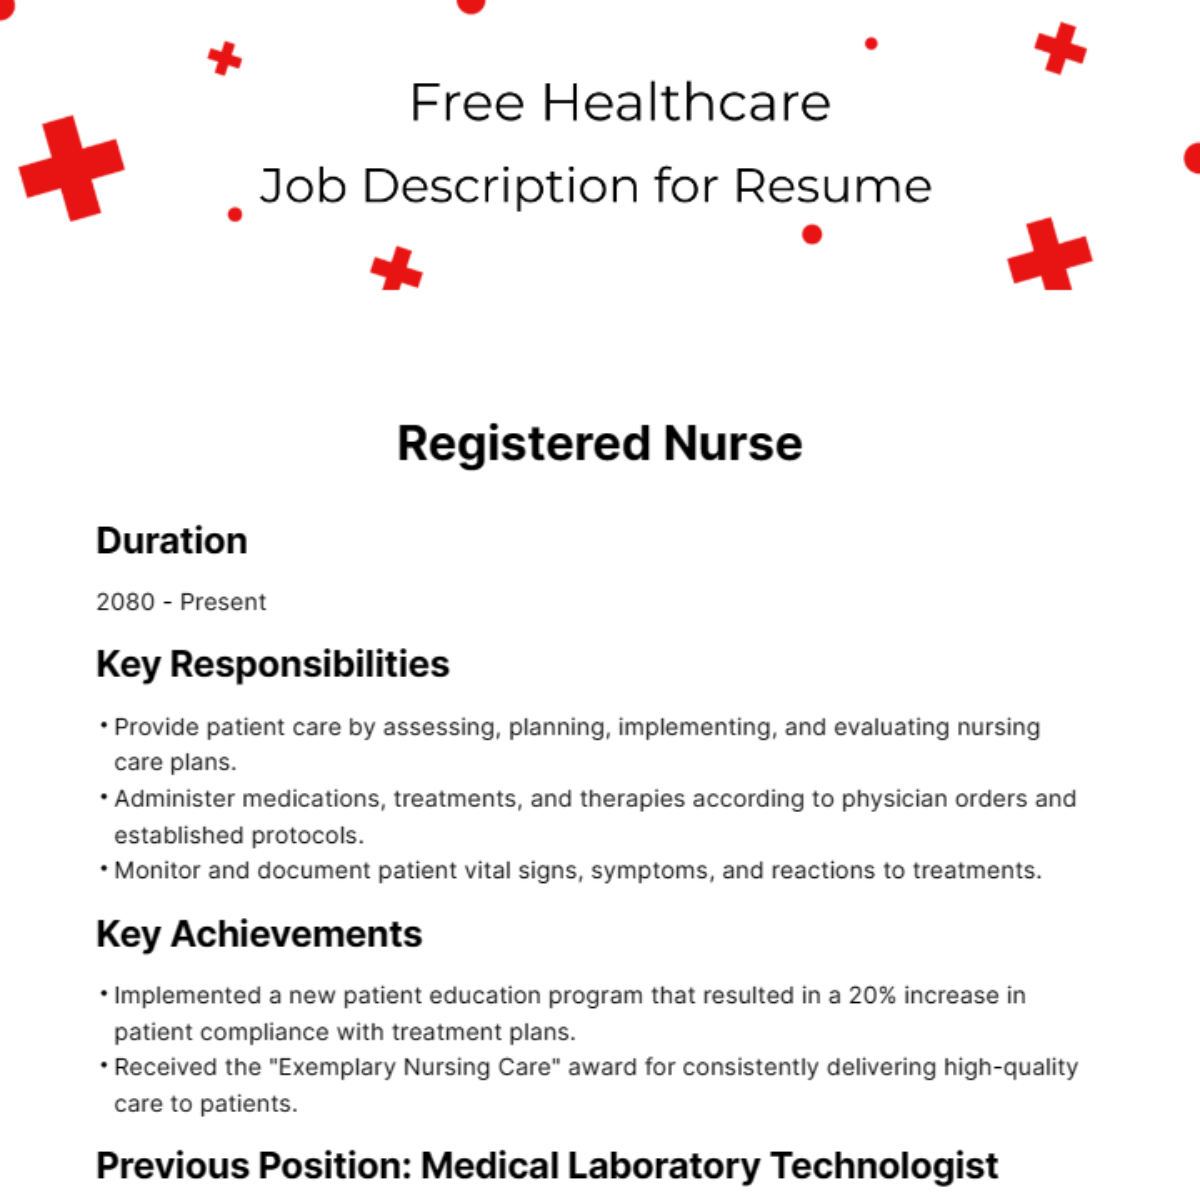 Free Healthcare Job Description for Resume Template